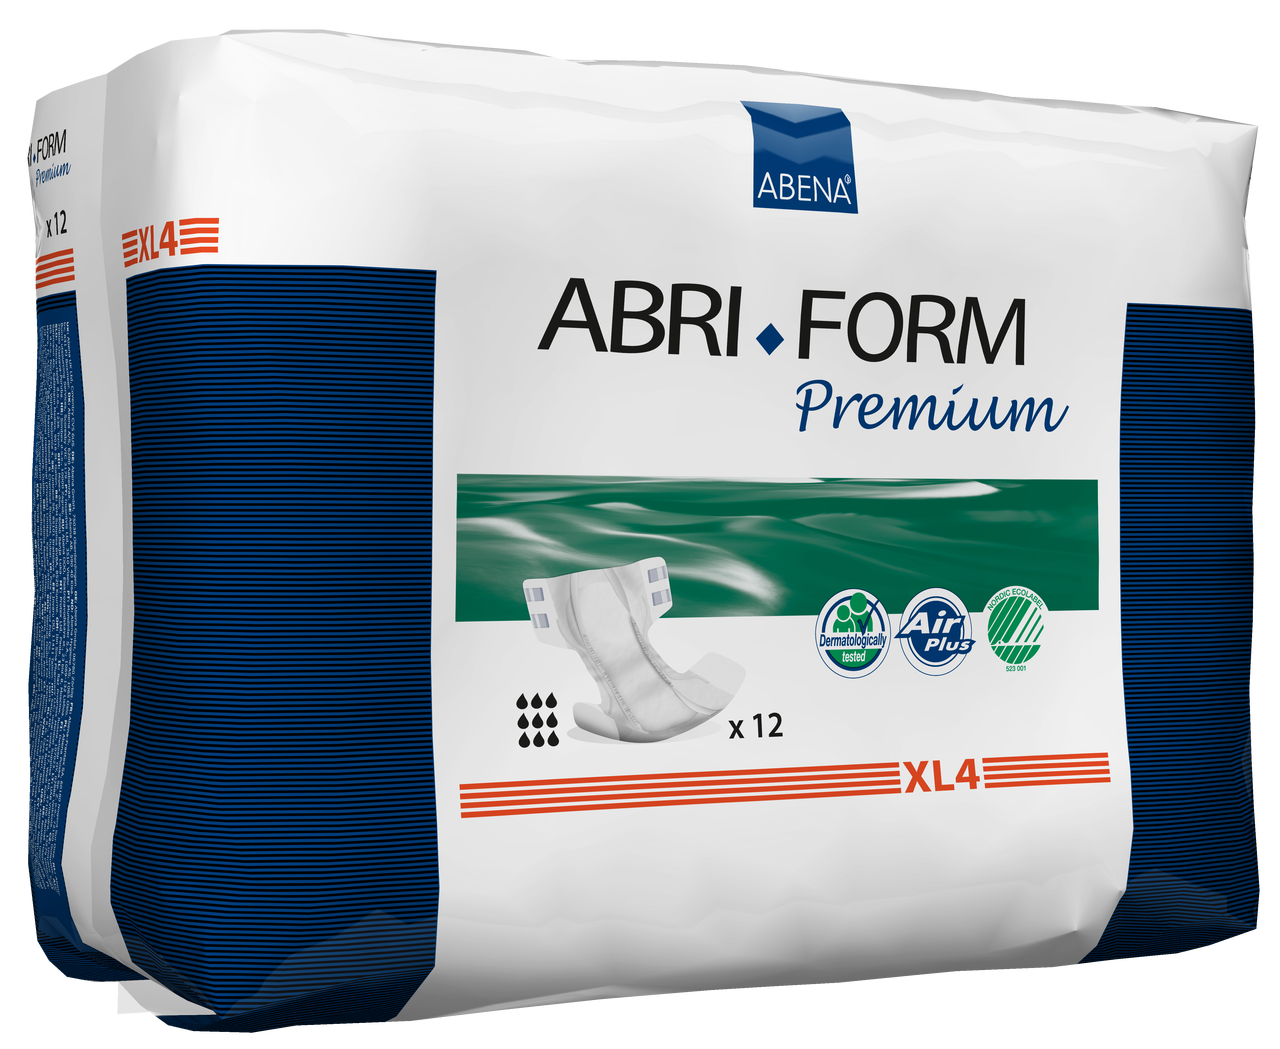 Abena Abri-Form Premium Adult Diapers with Tabs, XL4, 43071-BG12